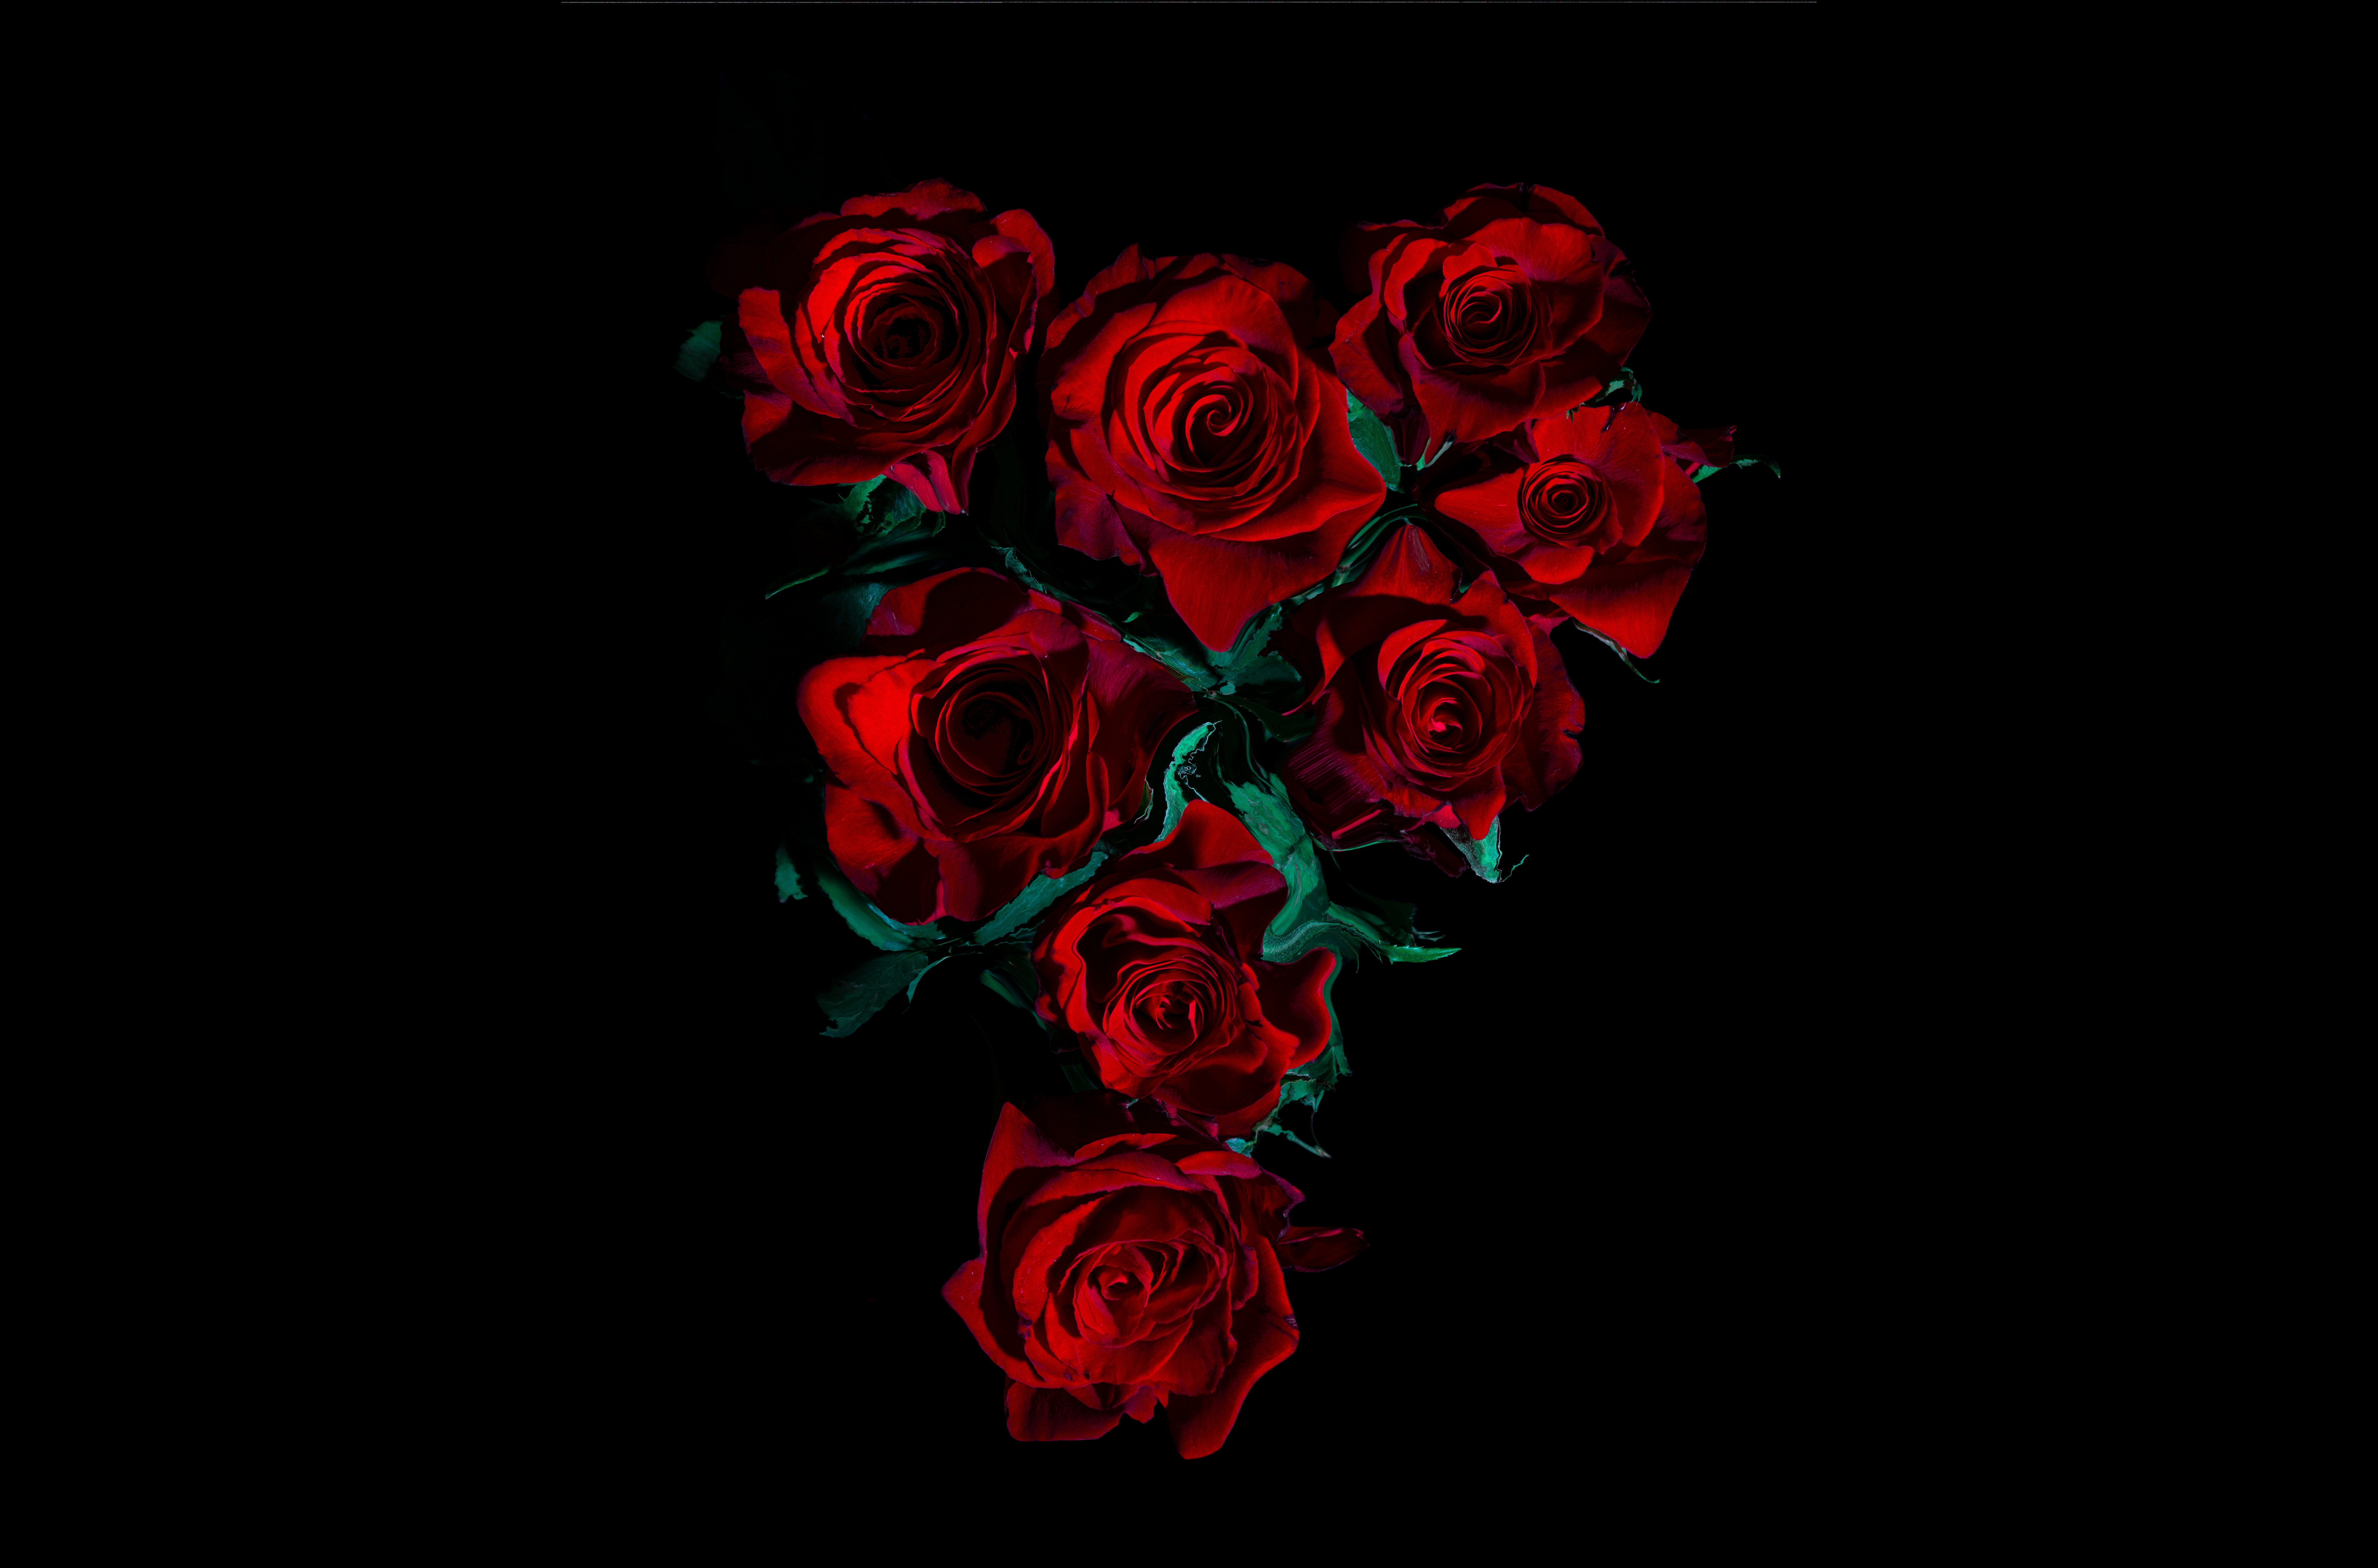 HD wallpaper, Red Roses, Rose Flowers, Black Background, Amoled, 8K, 5K